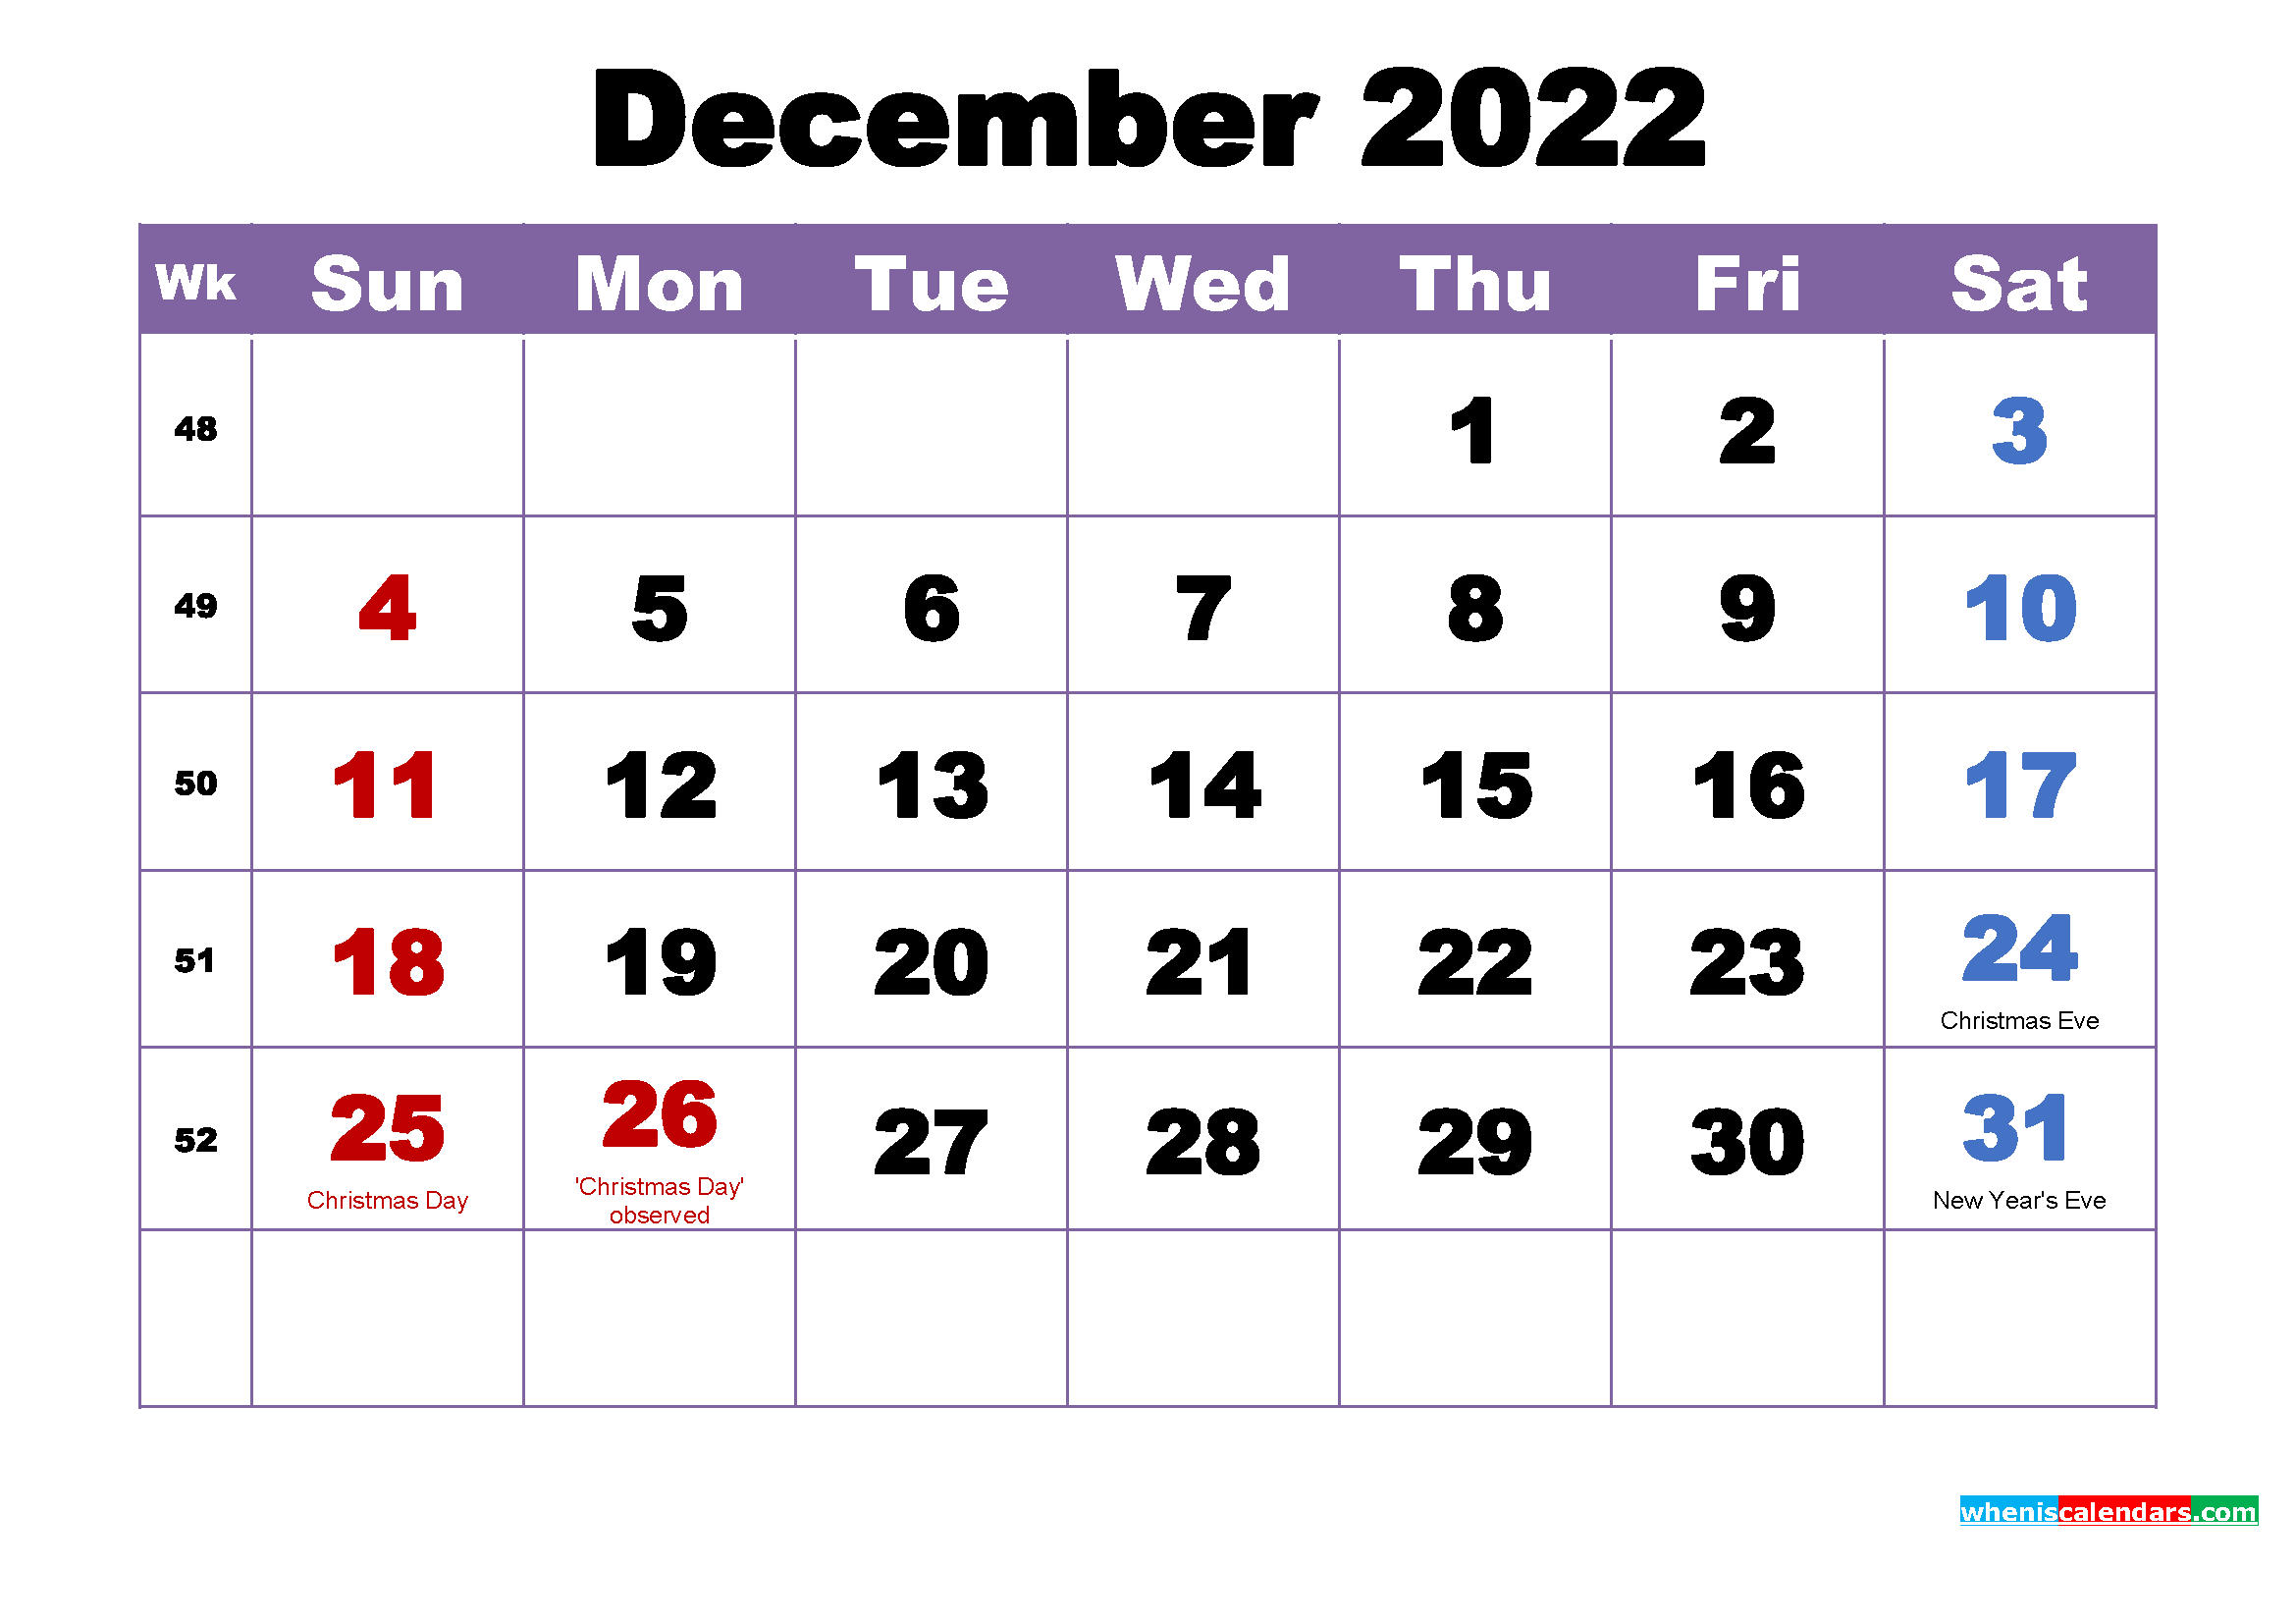 December Calendar 2022 With Holidays Free December 2022 Calendar With Holidays Printable